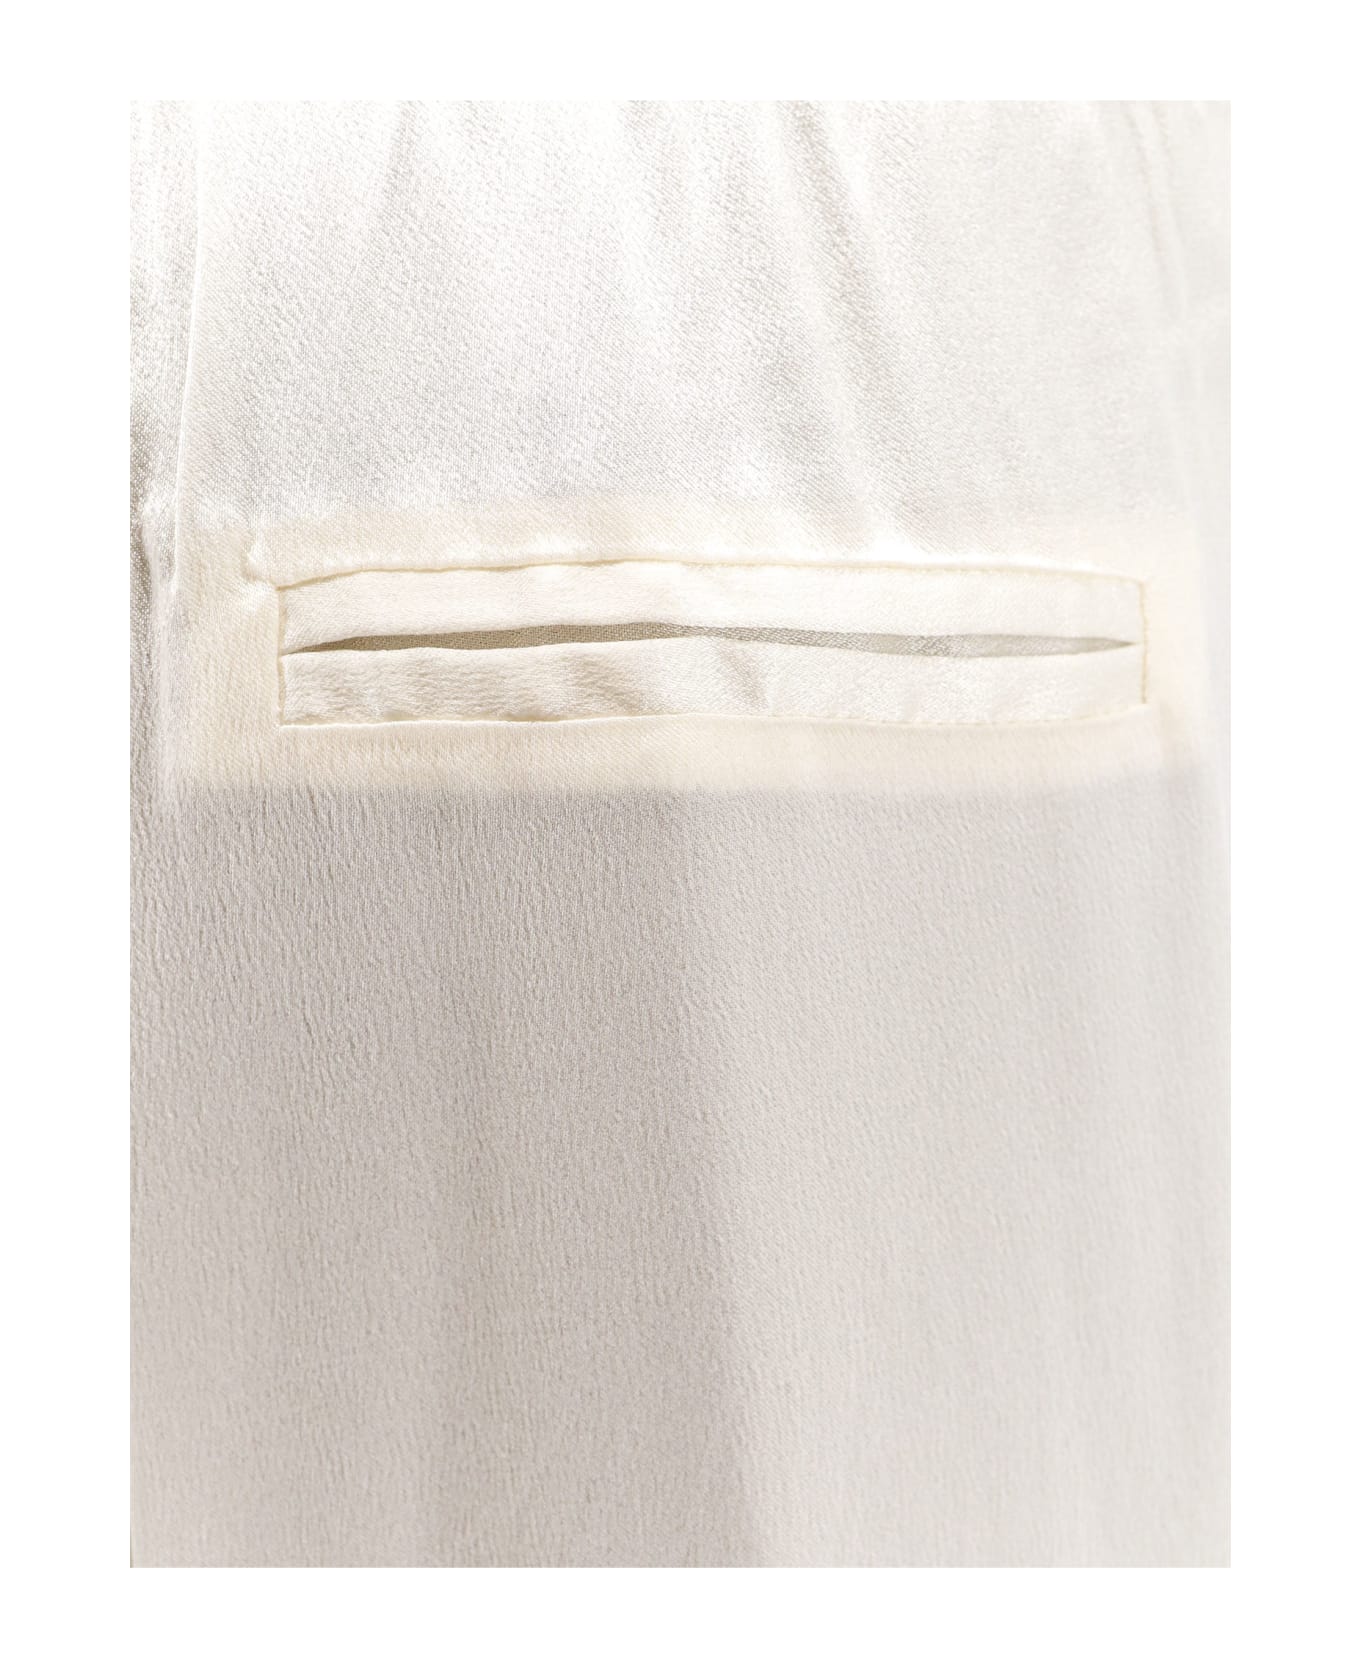 SEMICOUTURE Trouser - White ボトムス